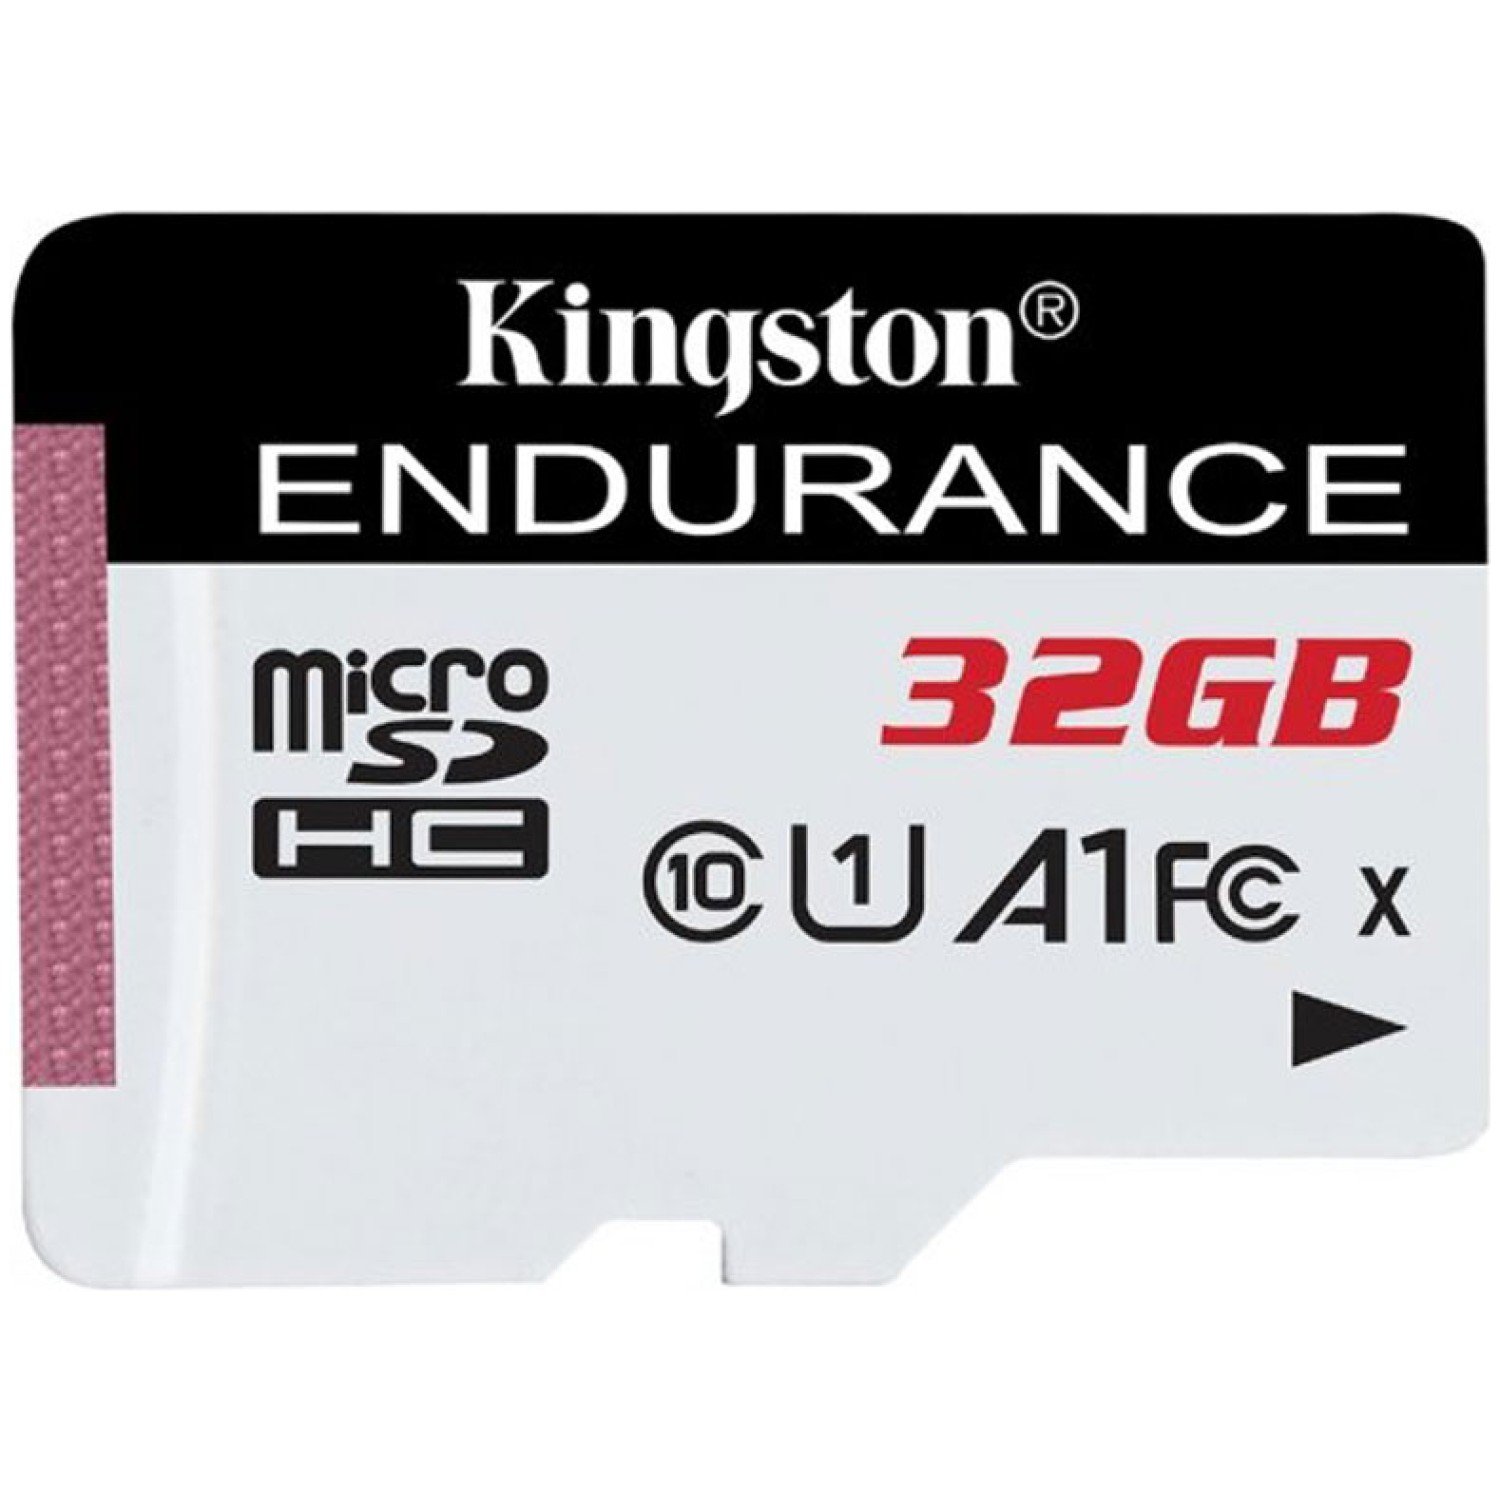 KINGSTON High Endurance microSD 32GB Class 10 UHS-I U3 (SDCE/32GB) spominska kartica